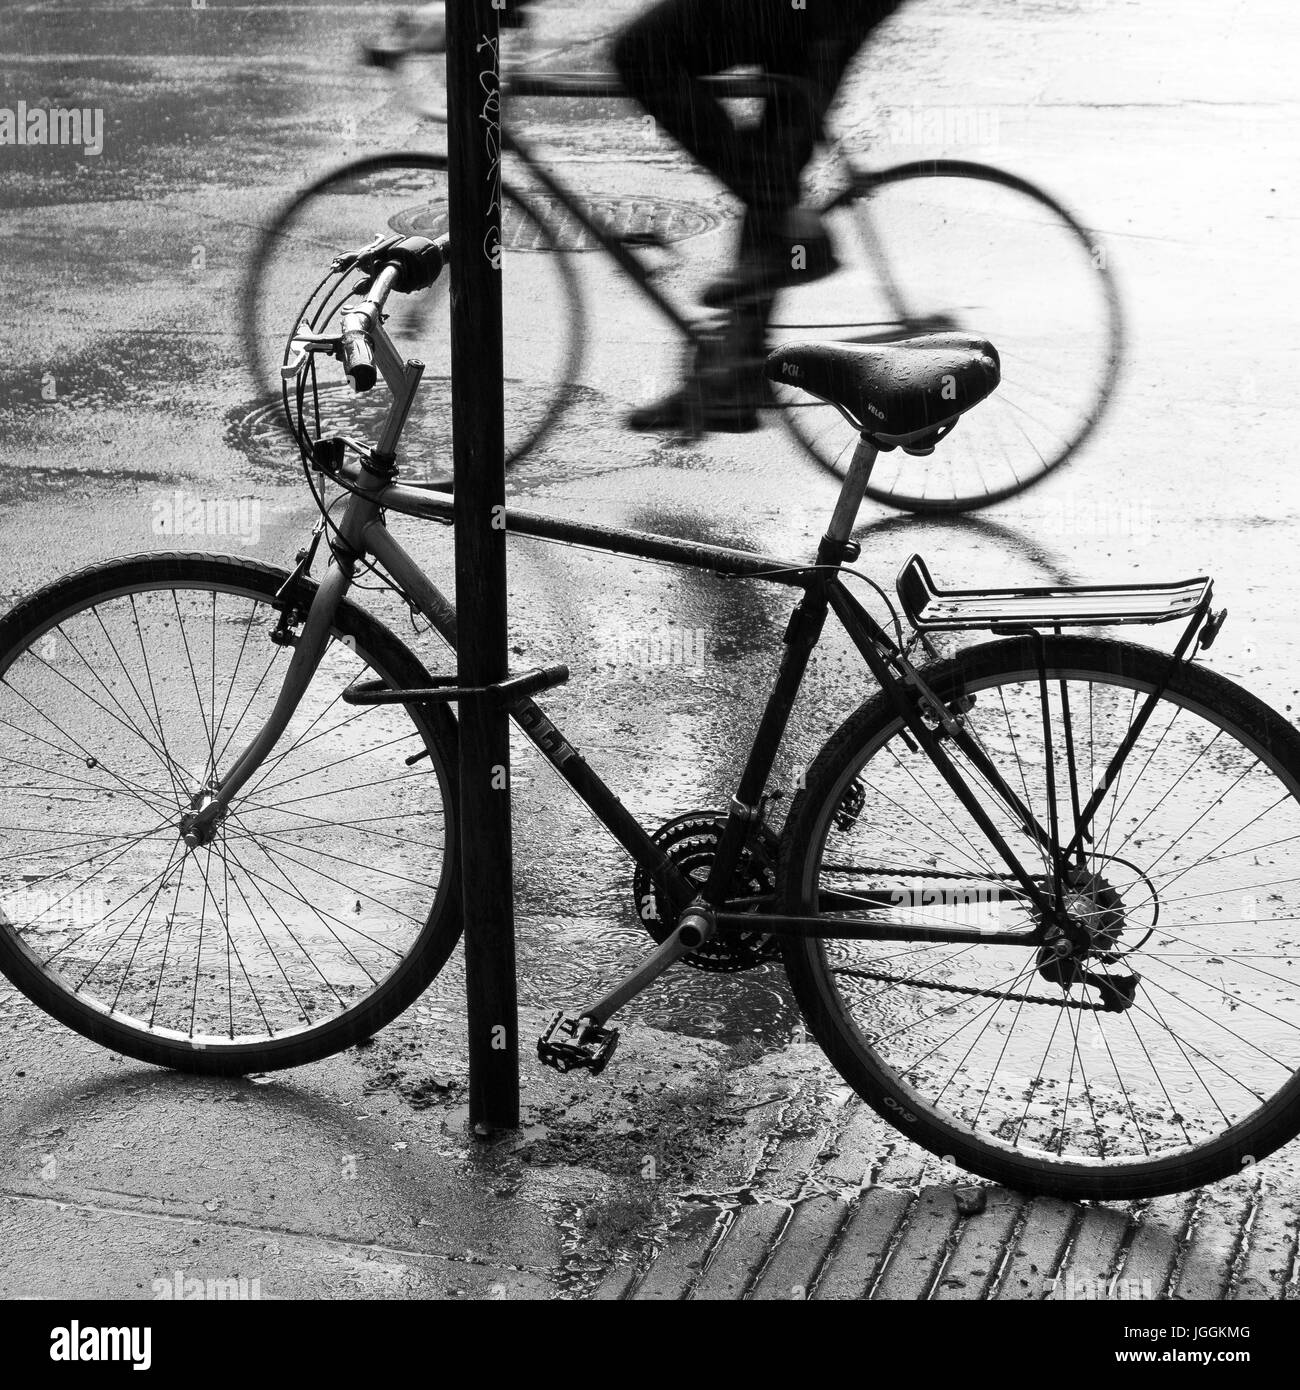 Bicycles under rain Stock Photo